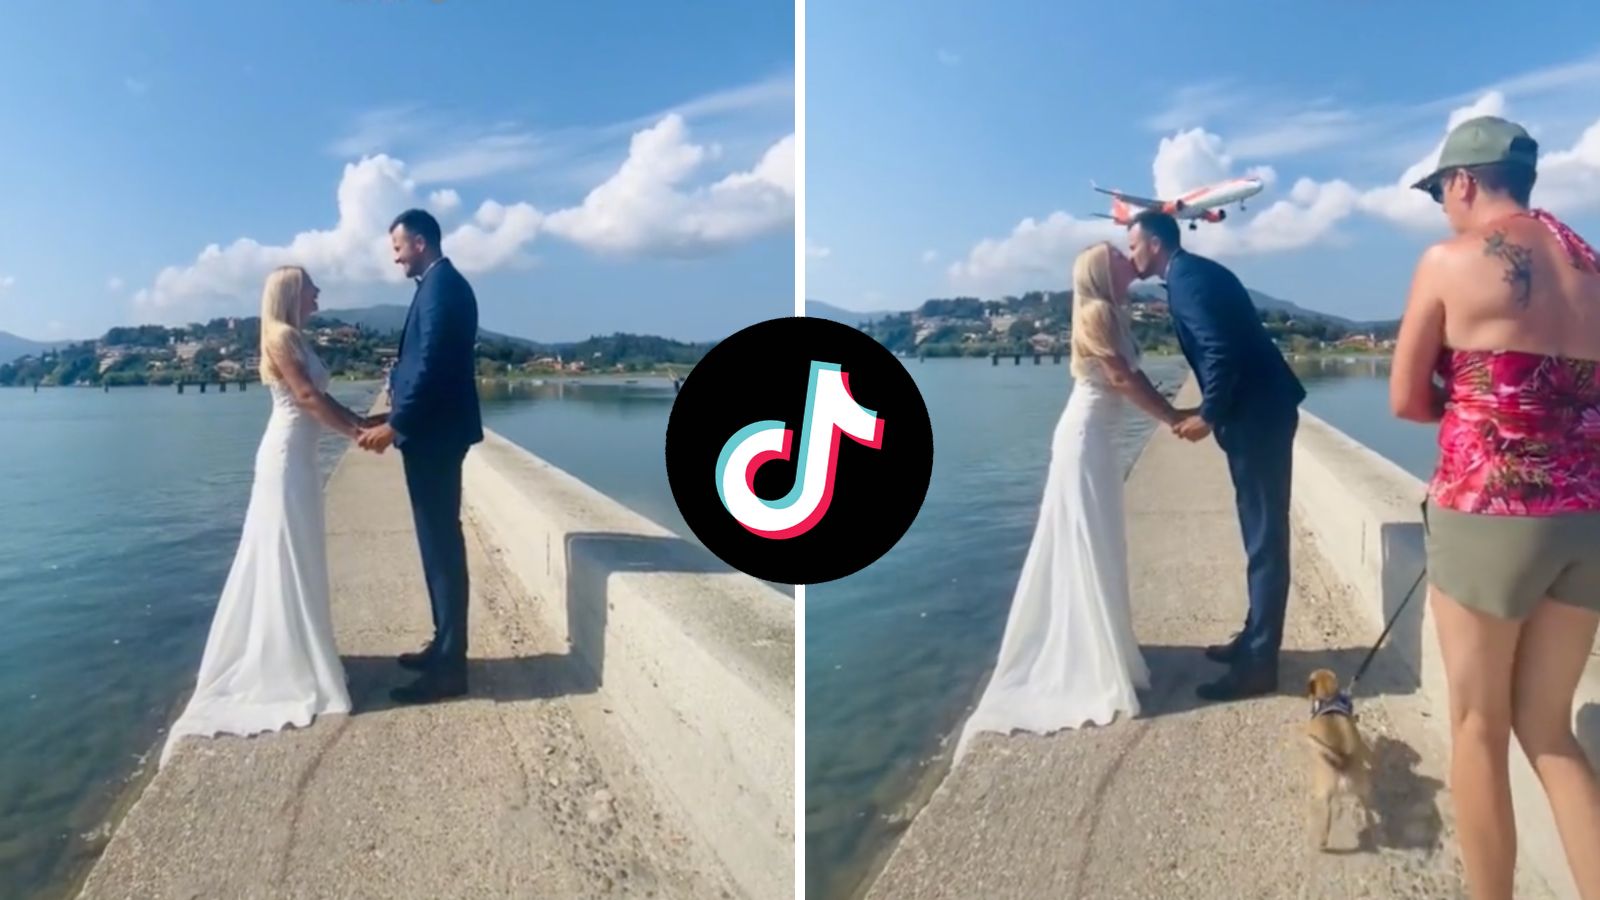 ‘Karen’ goes viral on TikTok after ruining perfect wedding photoshoot